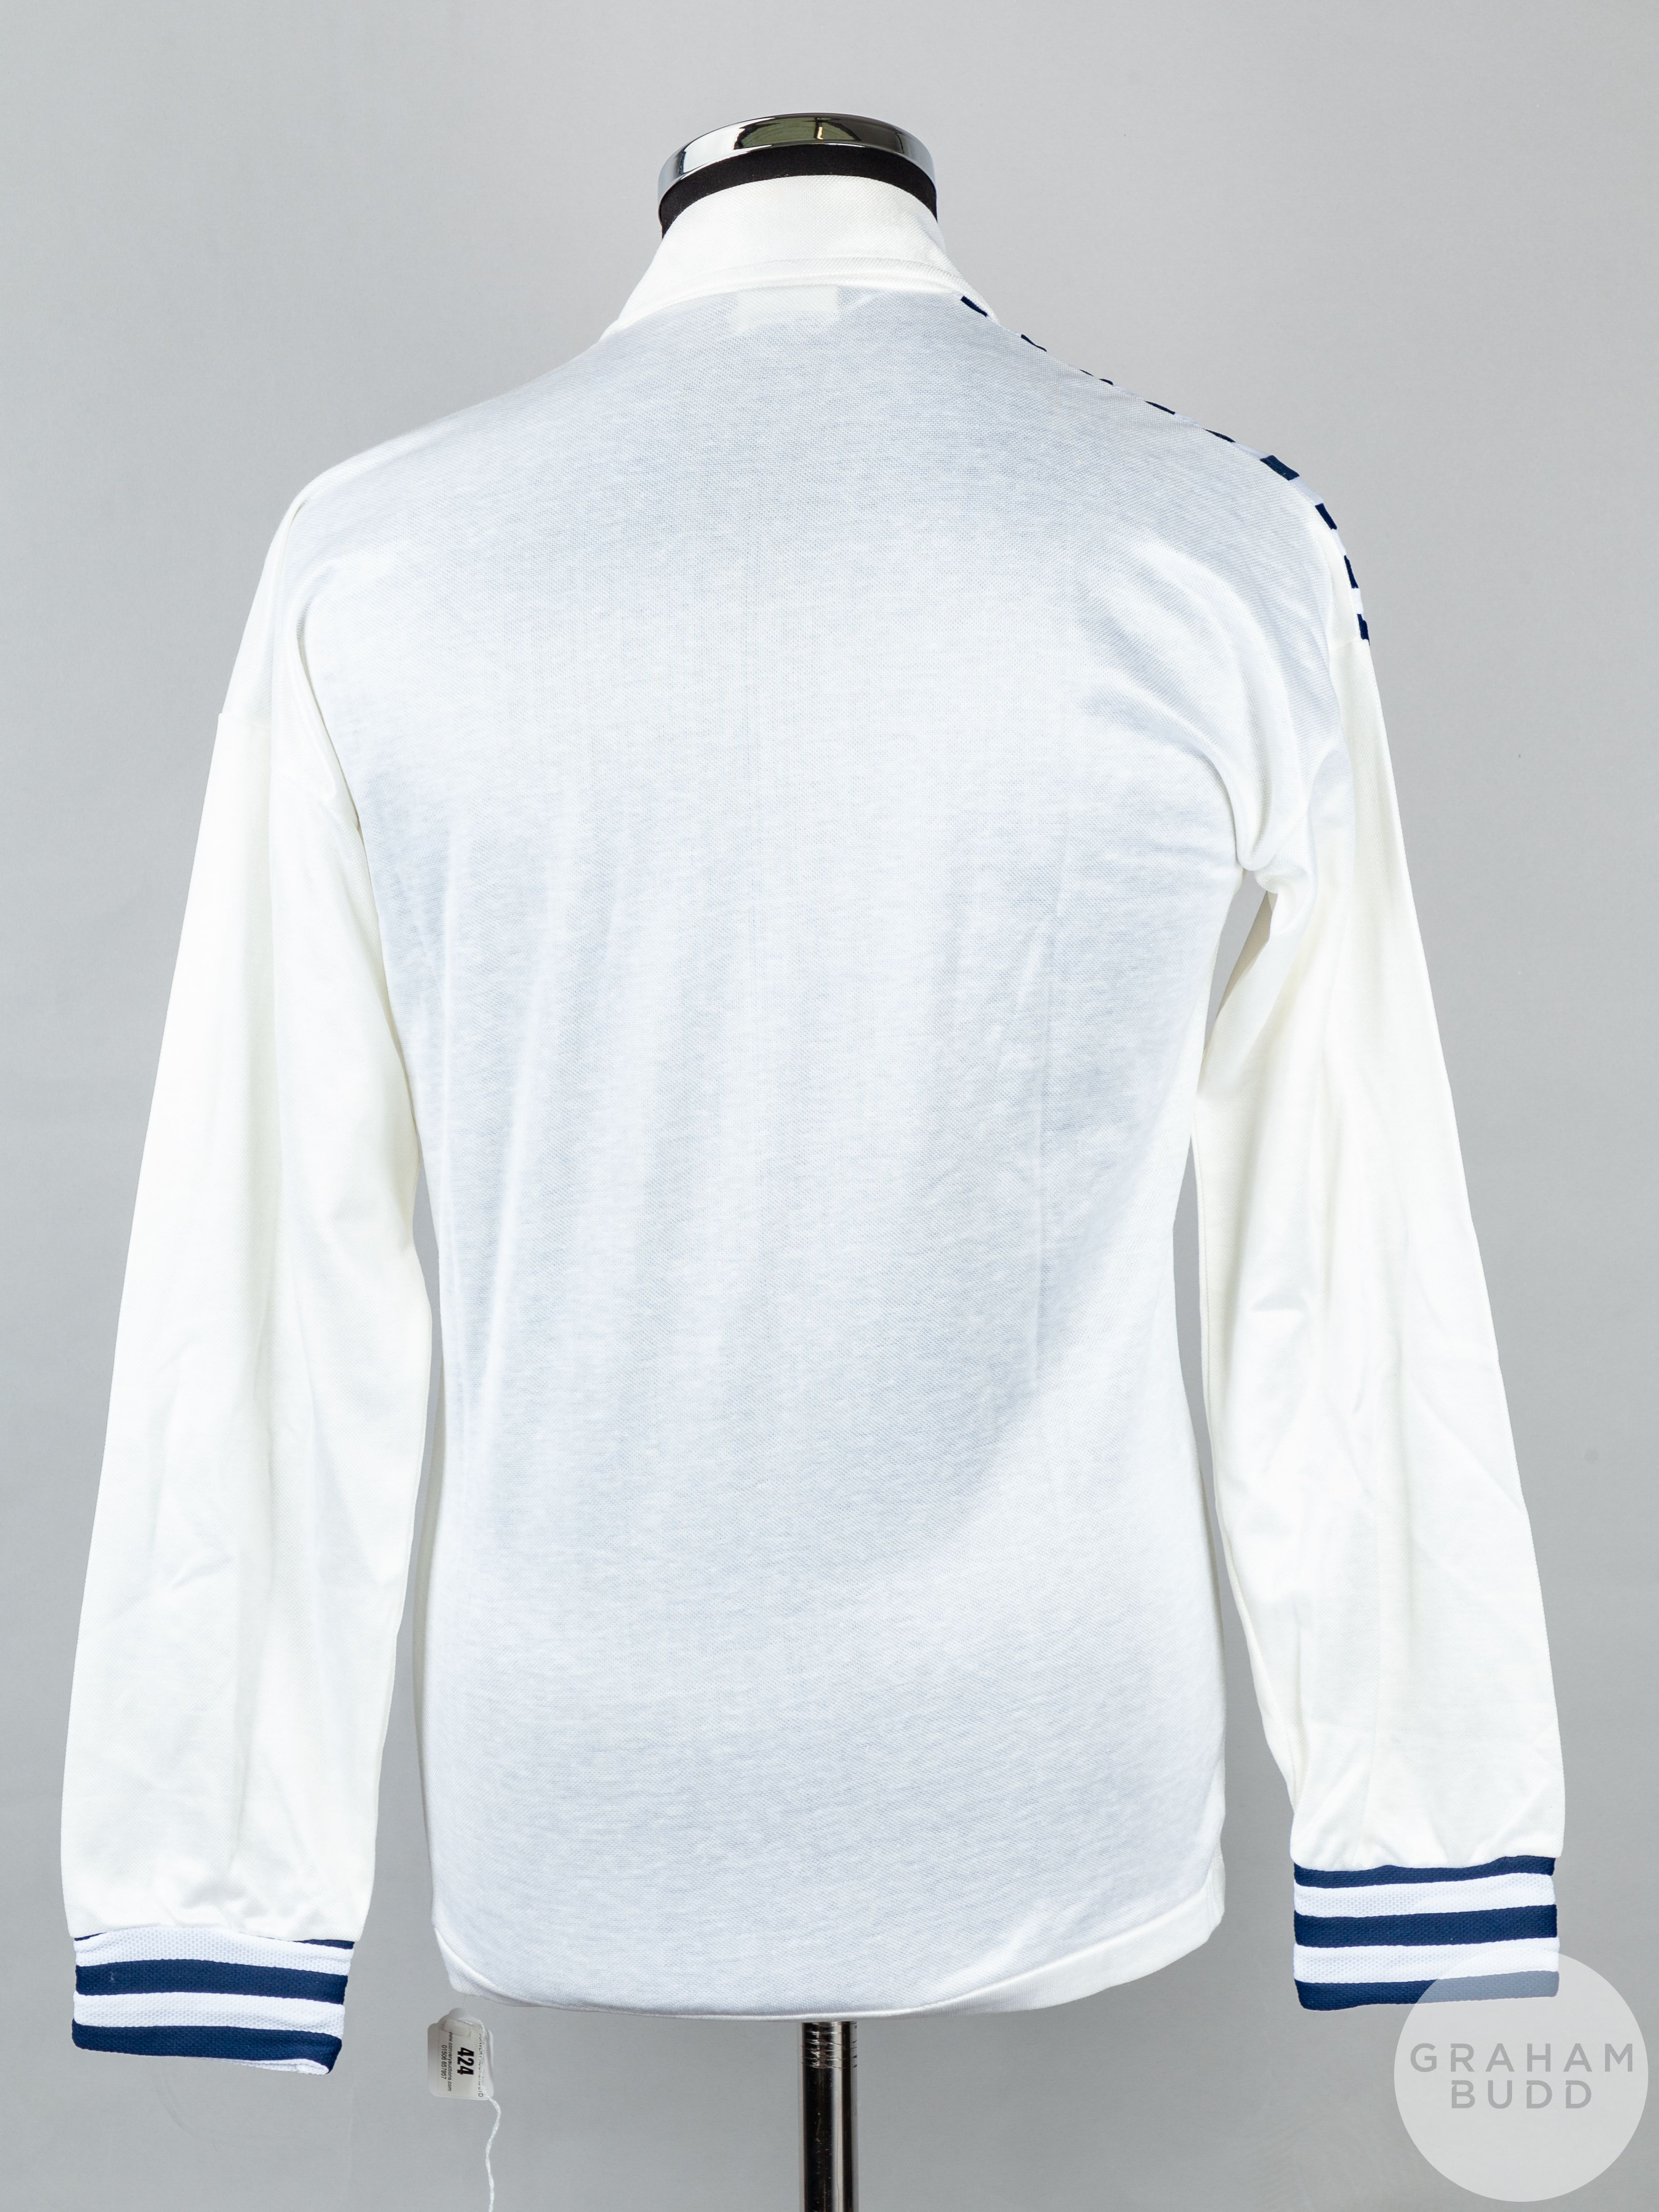 Rare white and blue Scotland International long-sleeved shirt - Image 2 of 5